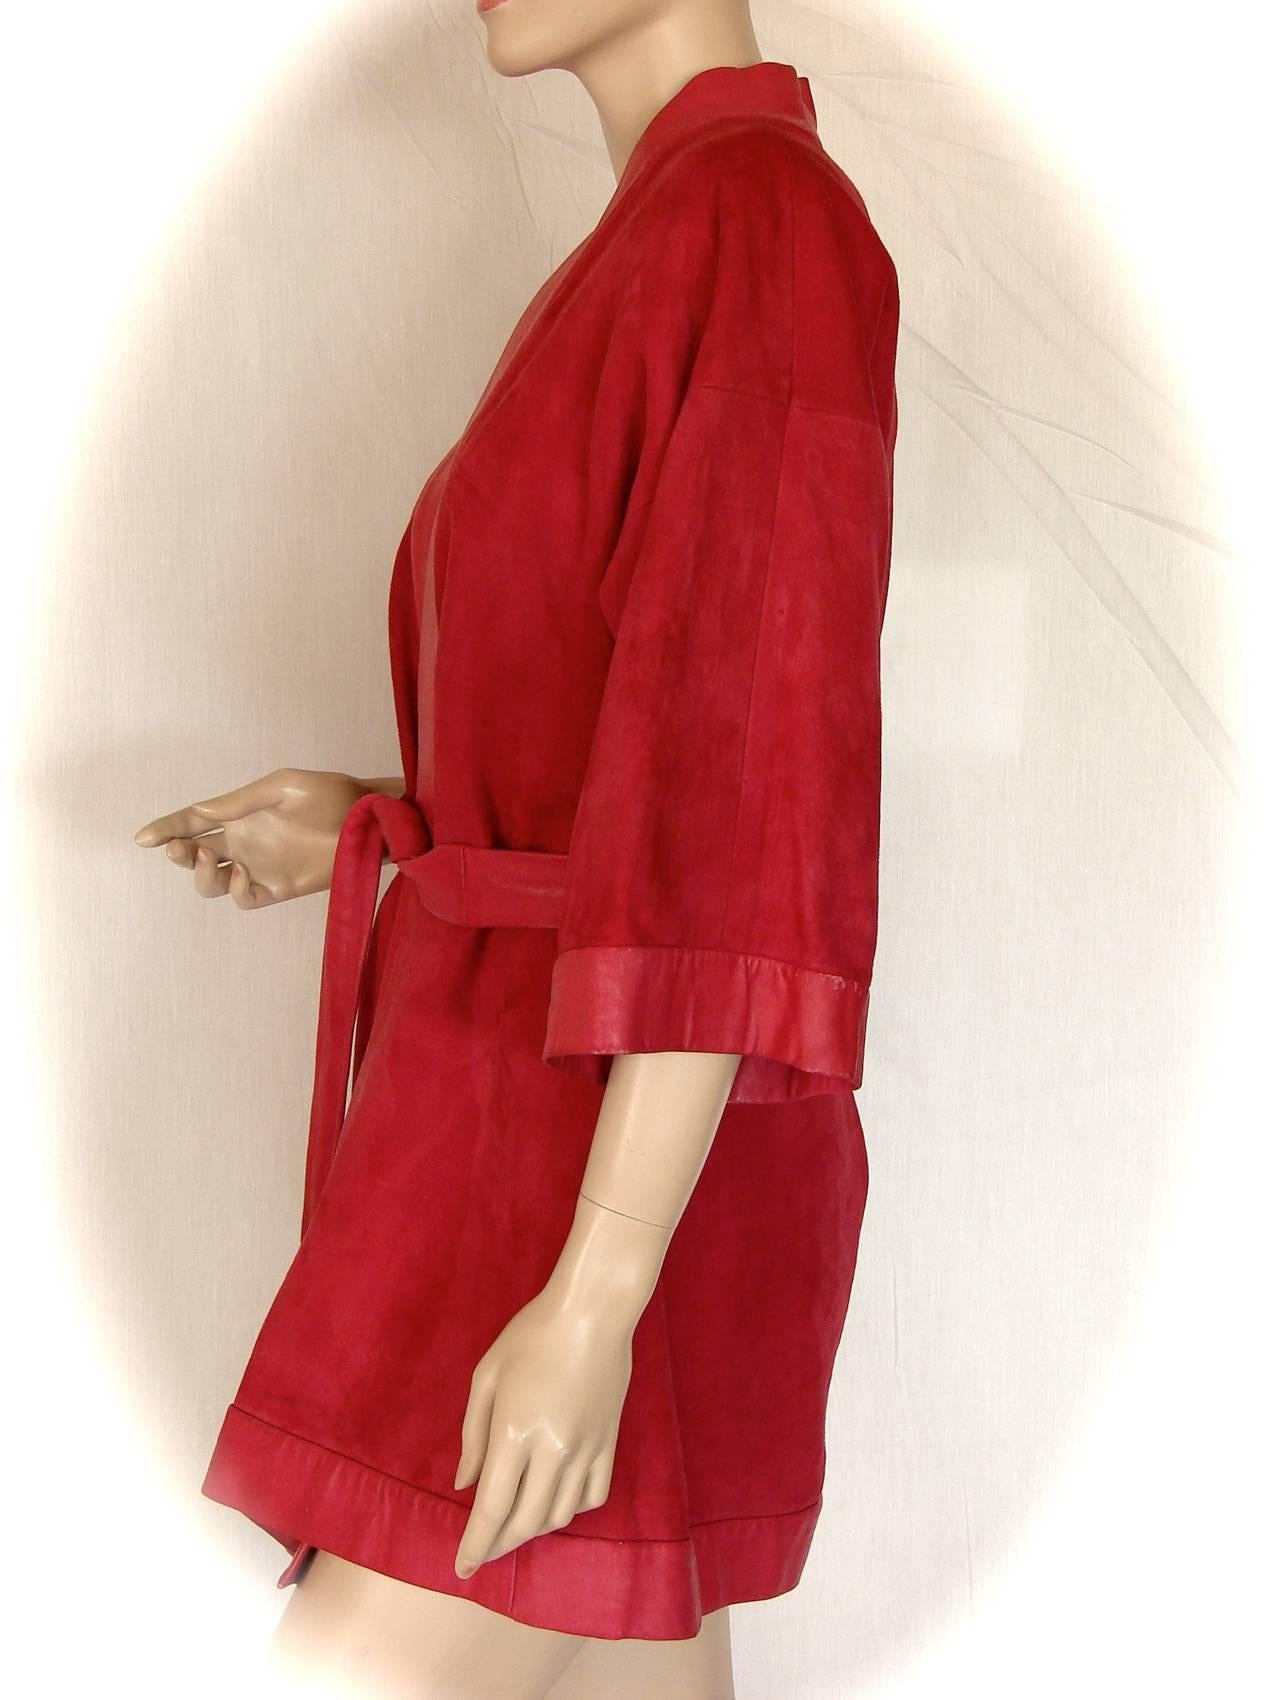 Women's Bonnie Cashin Cherry Red Suede Kimono with Leather Trim and Belt, 1960s